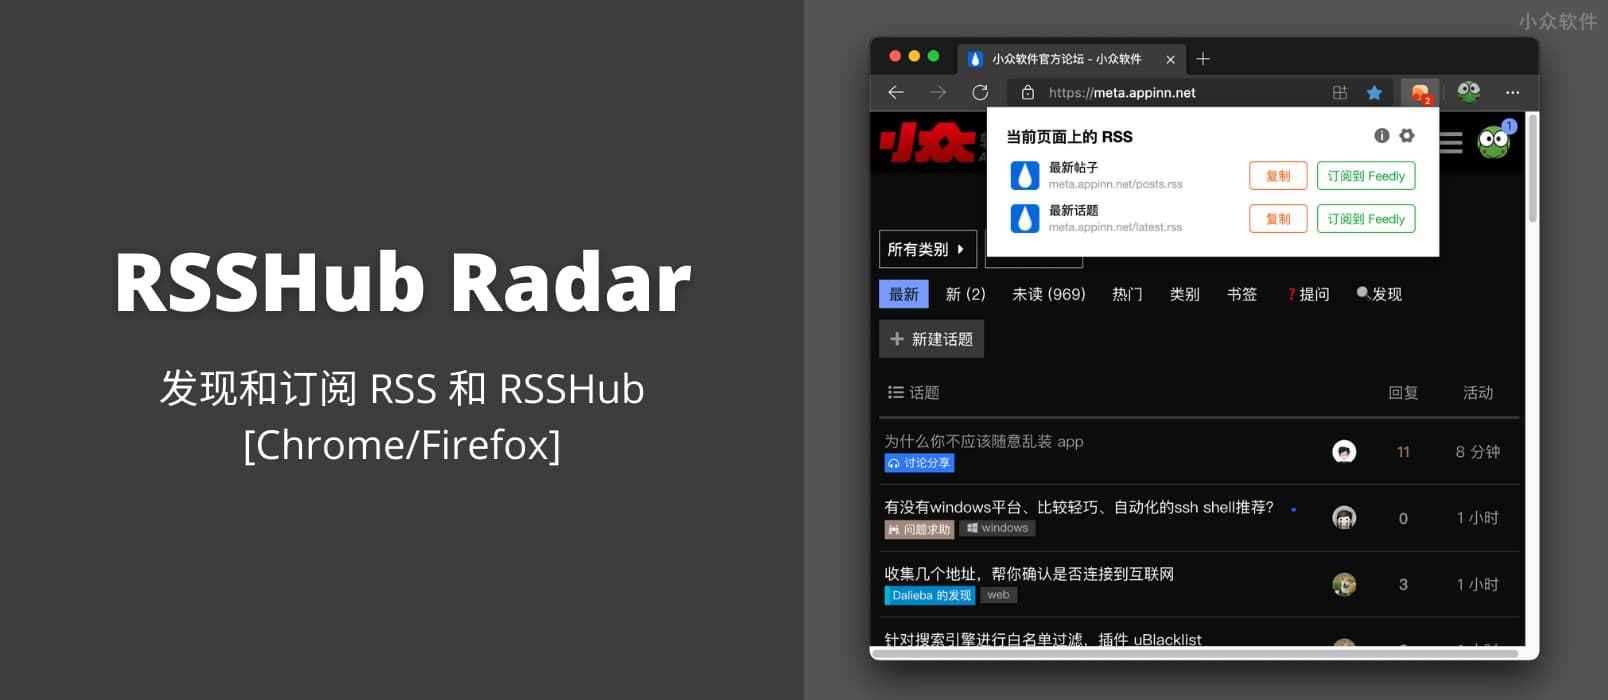 RSSHub Radar – 可能是最好的 RSS 和 RSSHub 地址发现与订阅扩展[Chrome/Firefox]